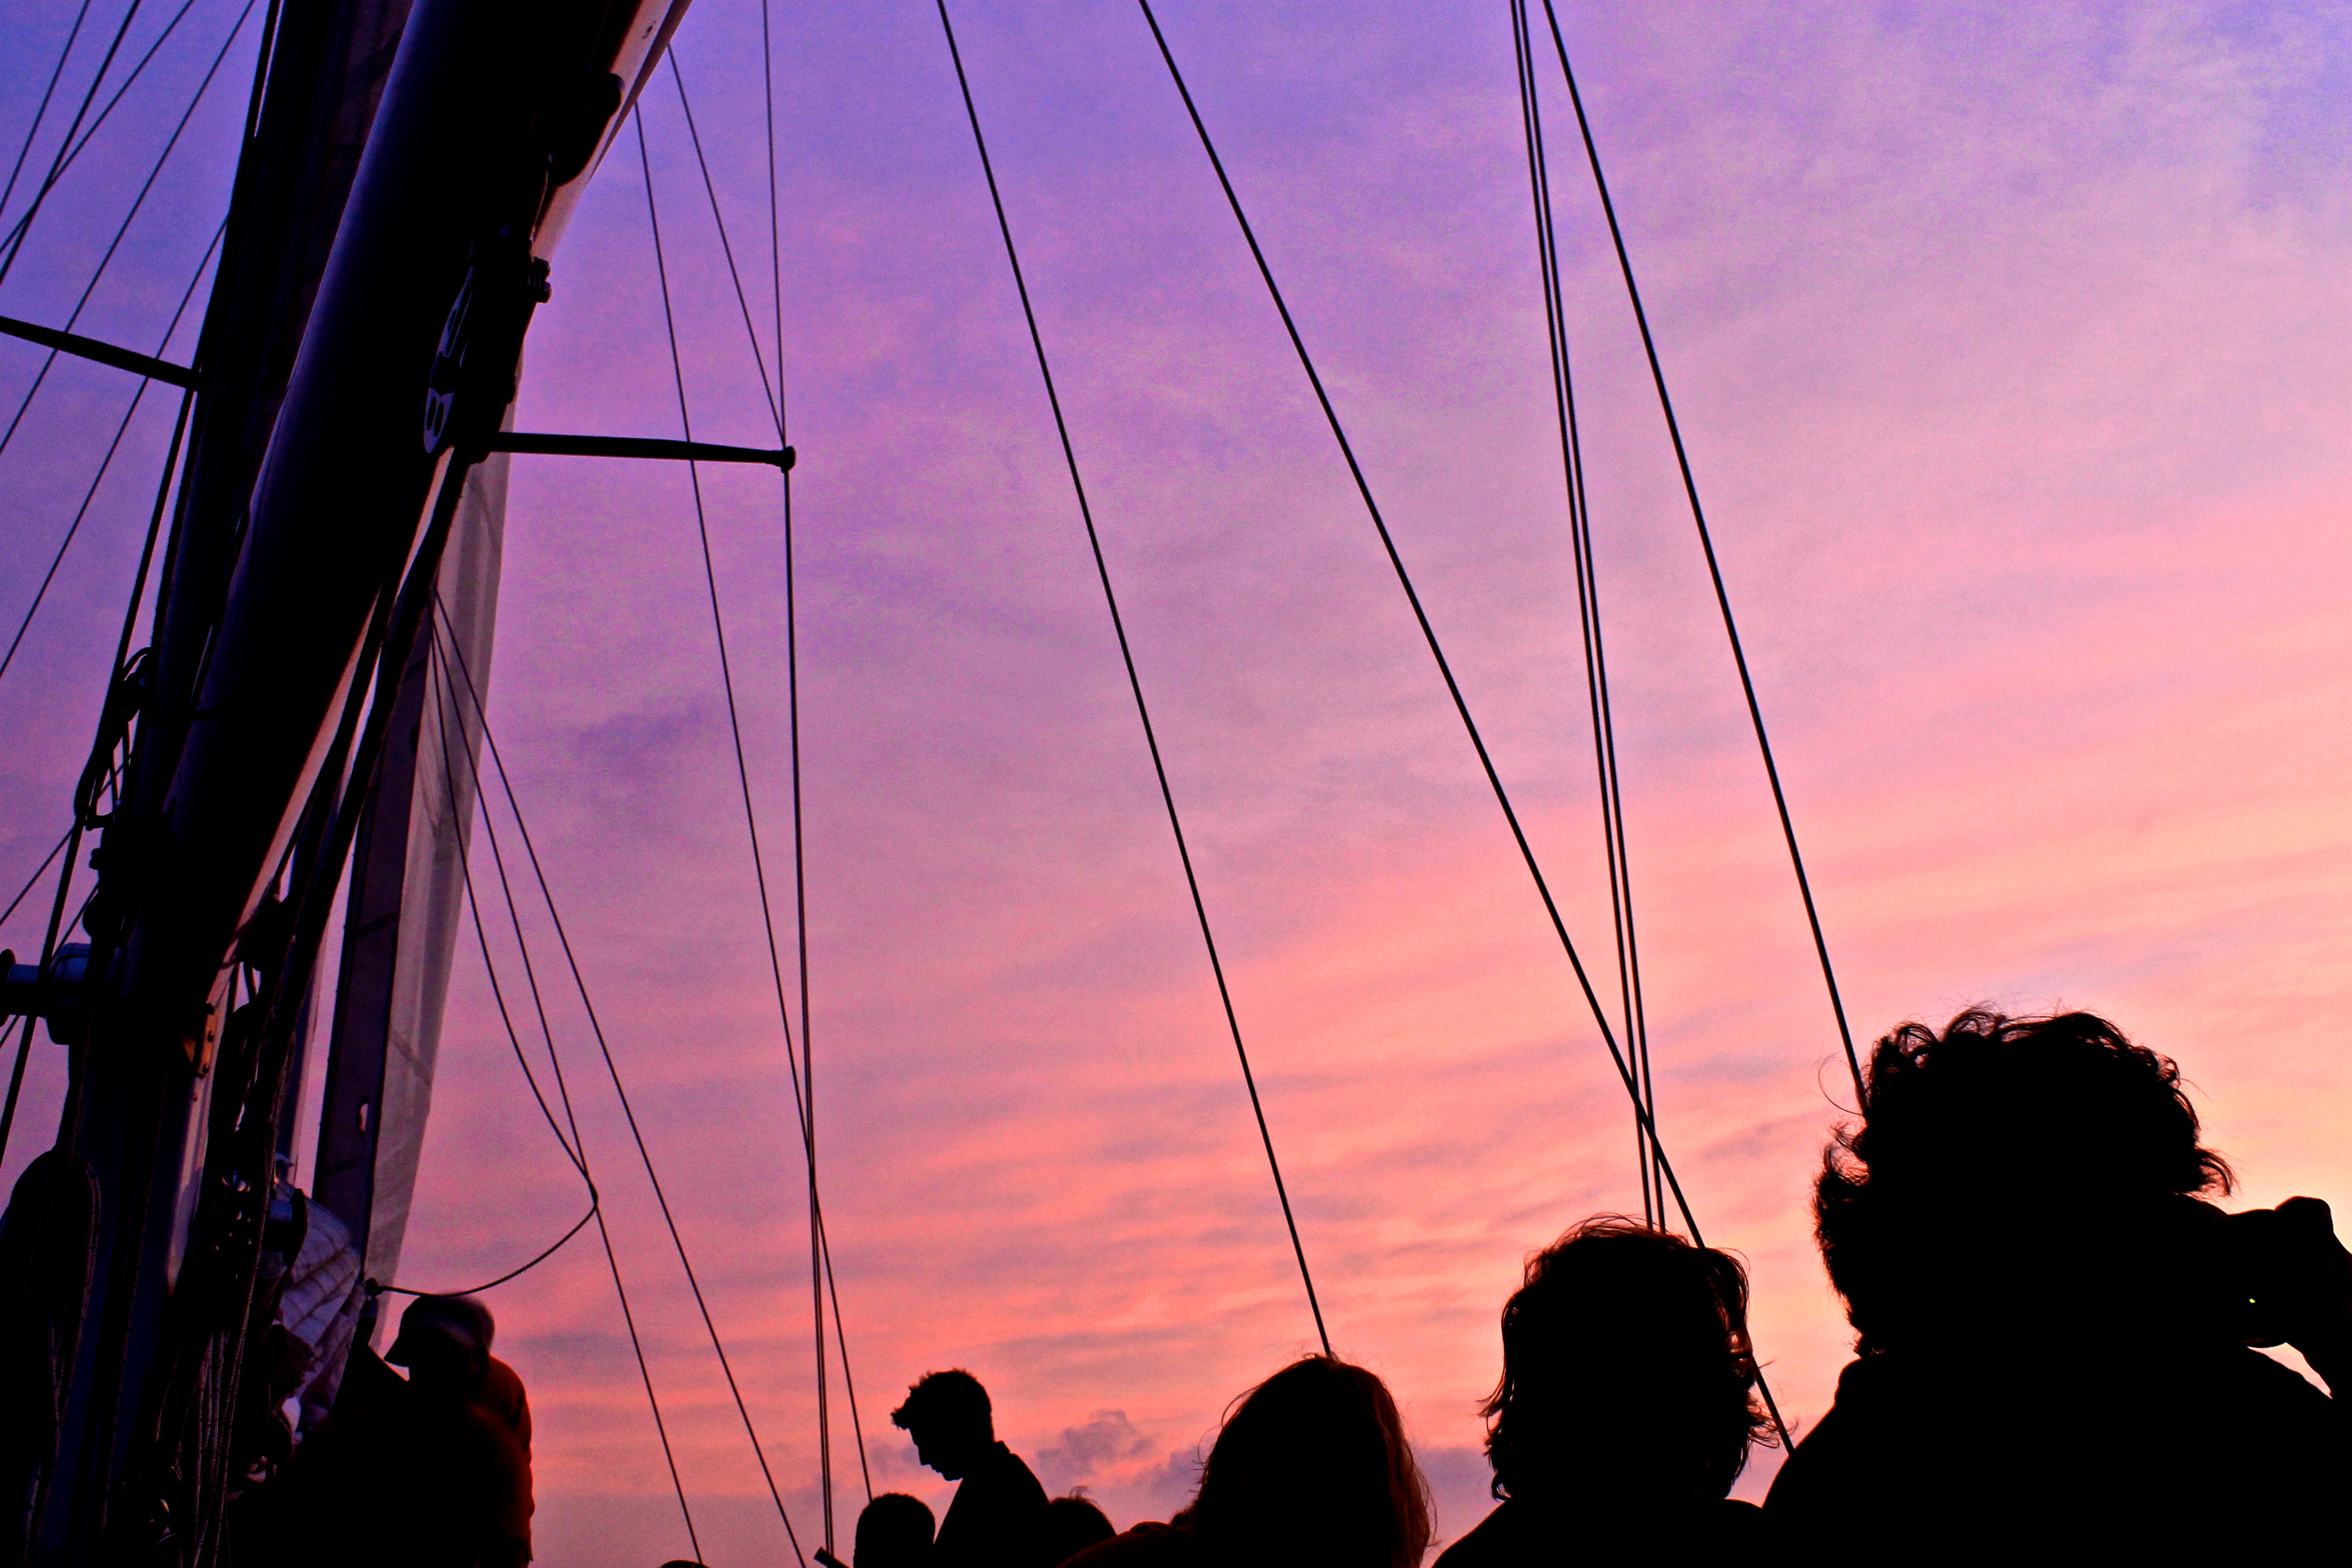 Purple sunset sky above the sails